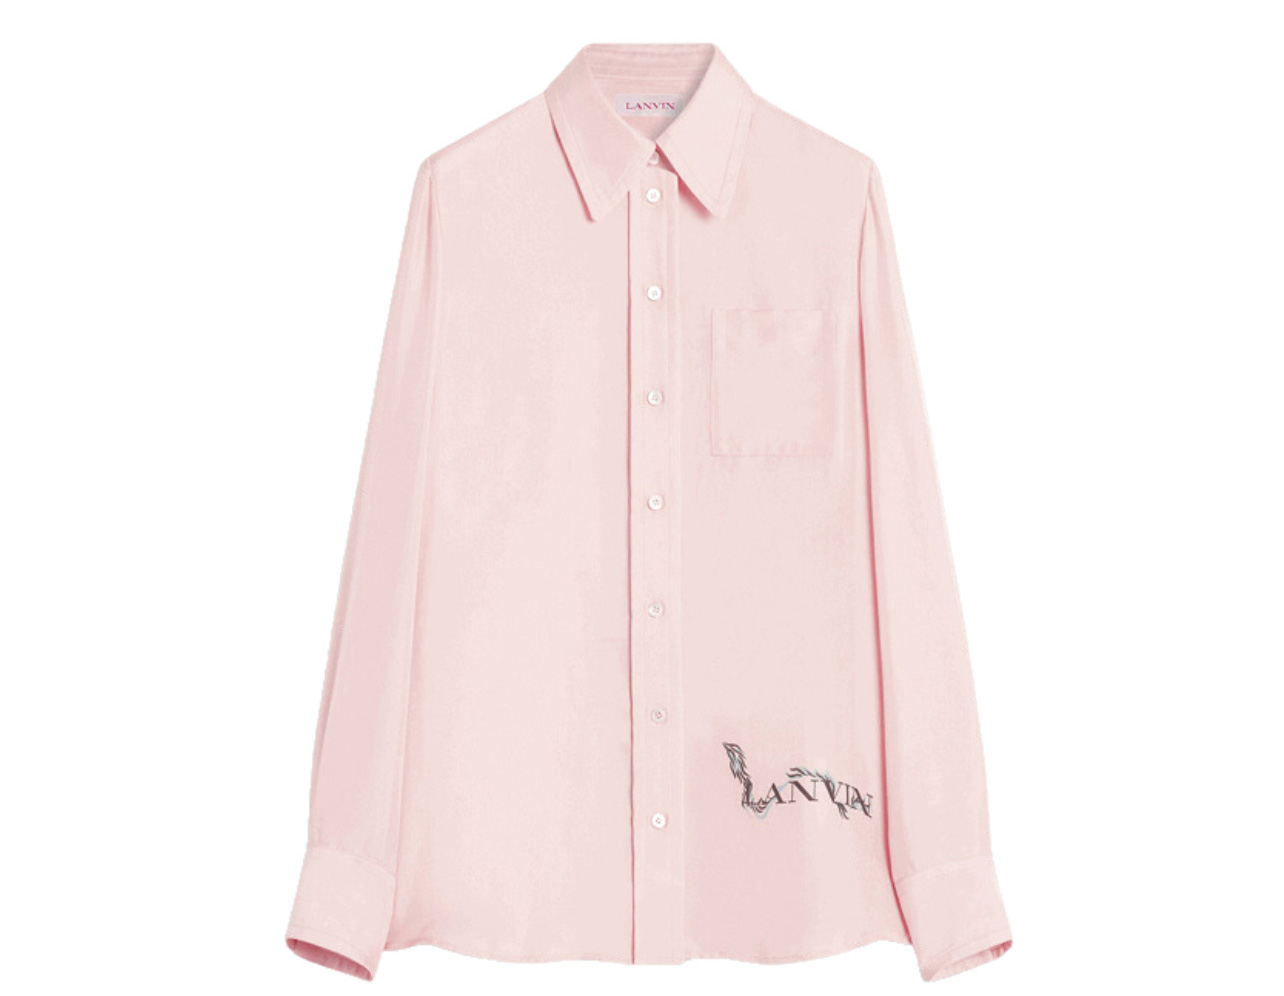 Lanvin Pink Button Down Shirt